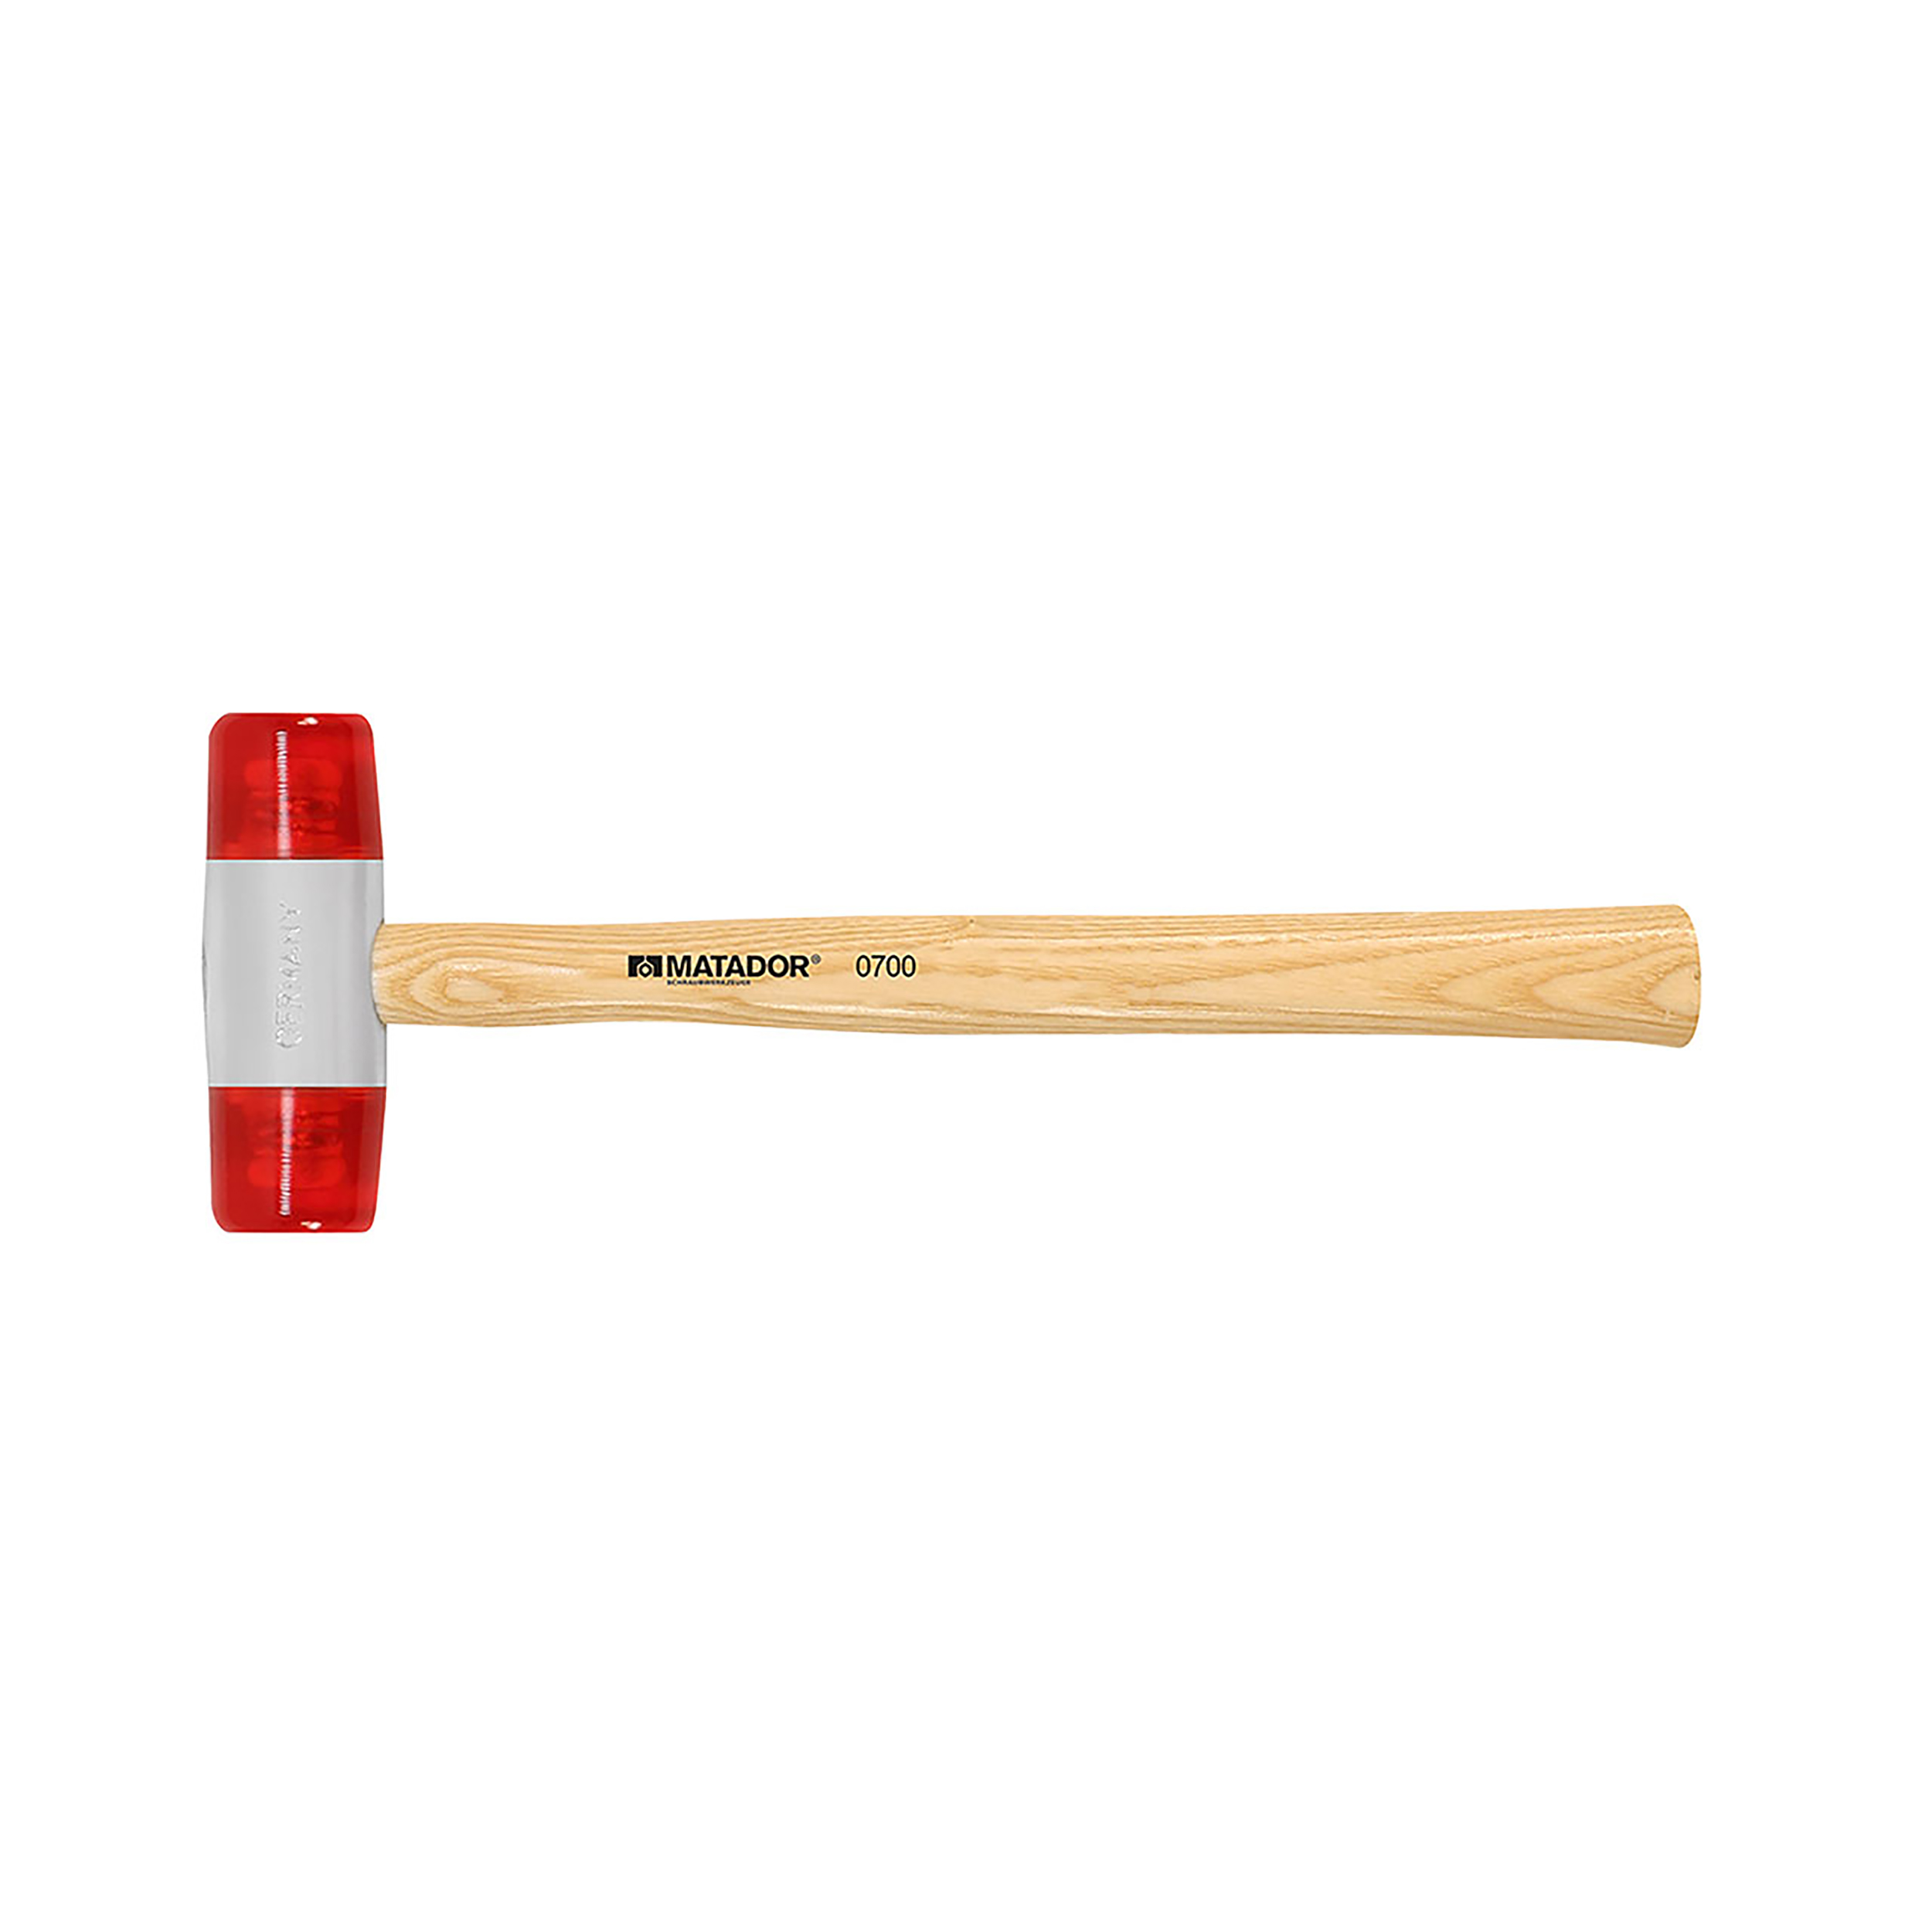 Treib- und Ausbeulhammer, 350 g, 32 mm, MATADOR Art.-Nr.: 07000003